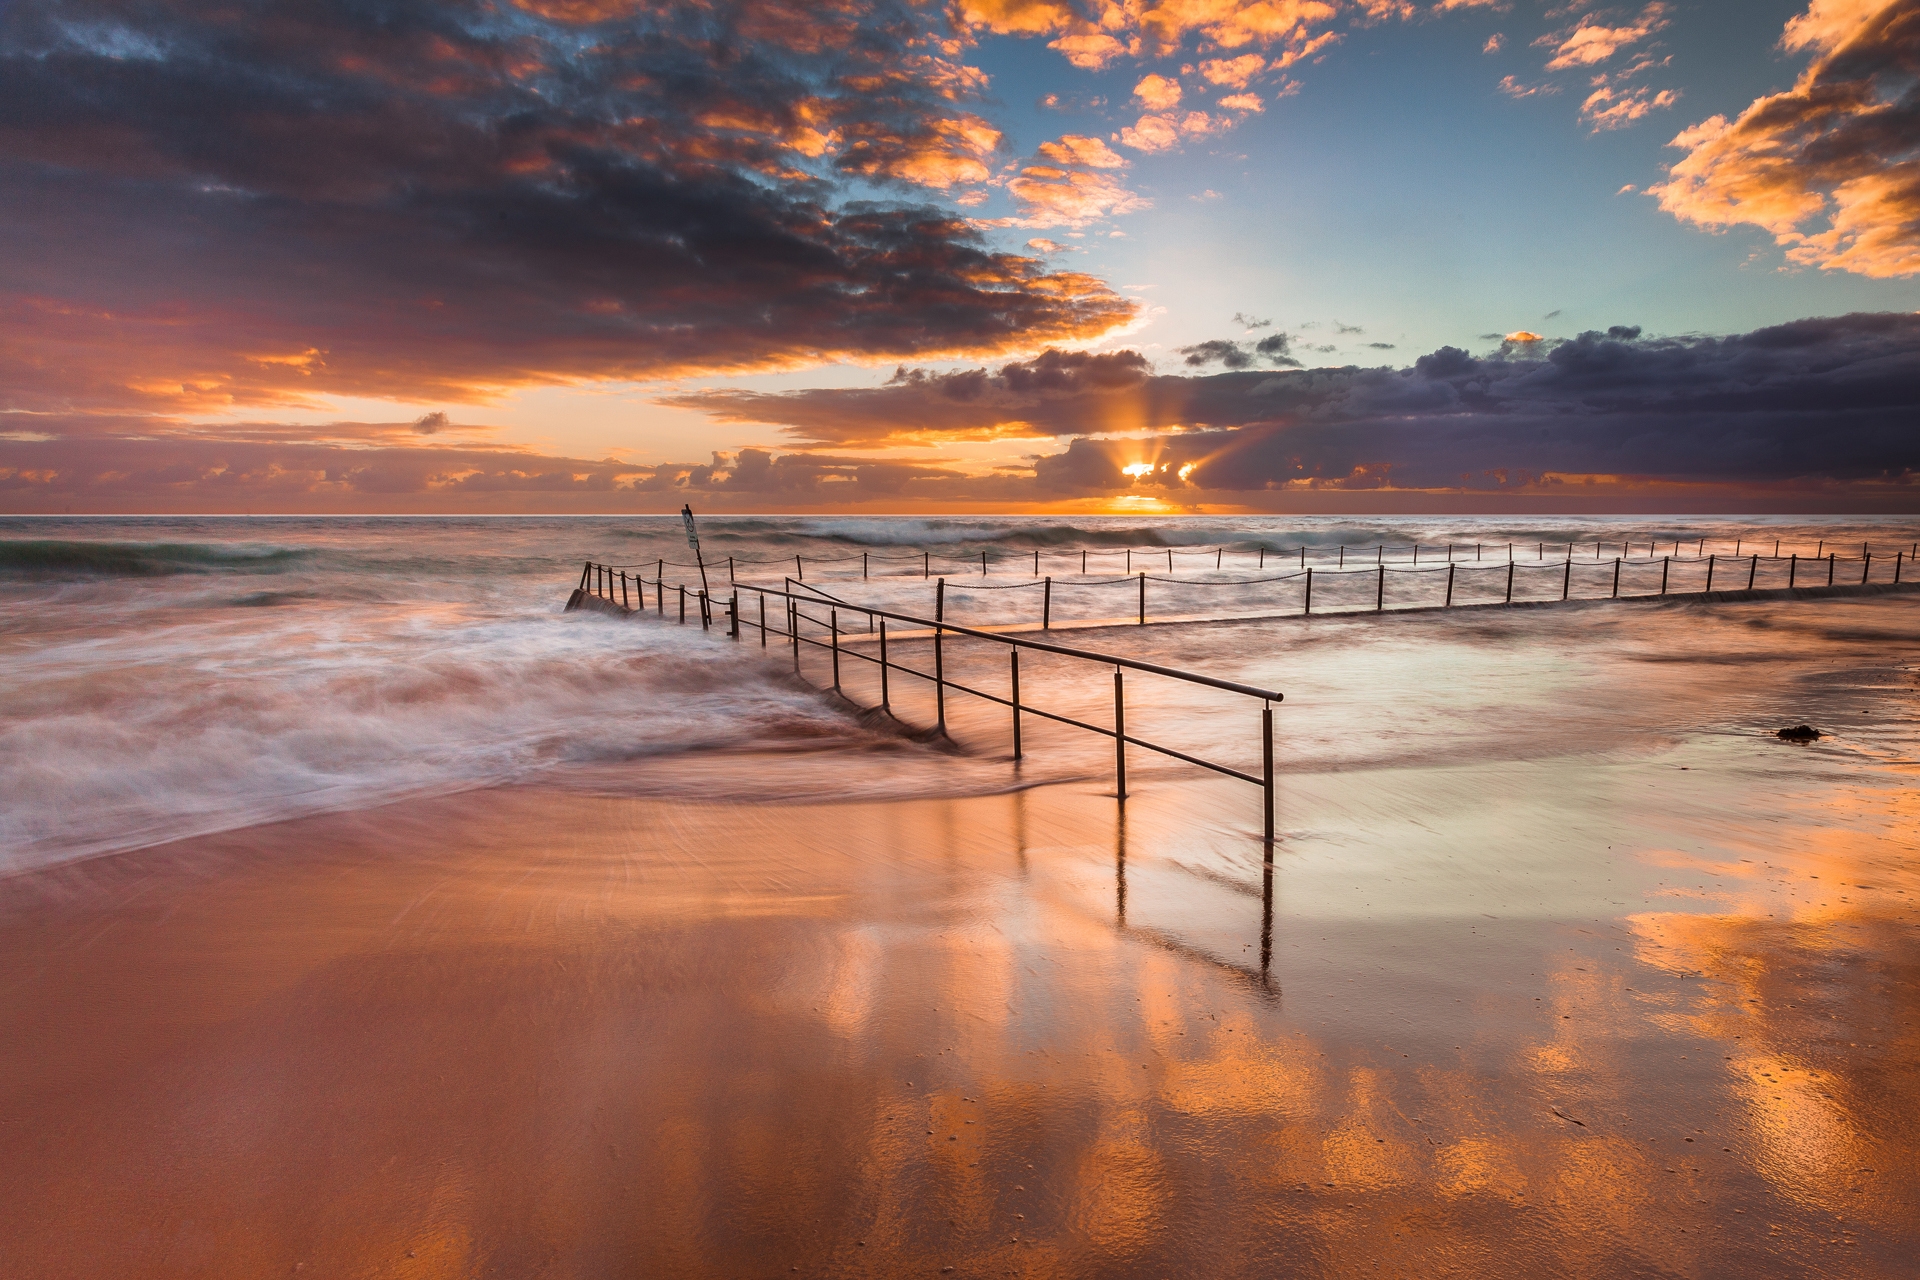 The coast in Australia at sunset